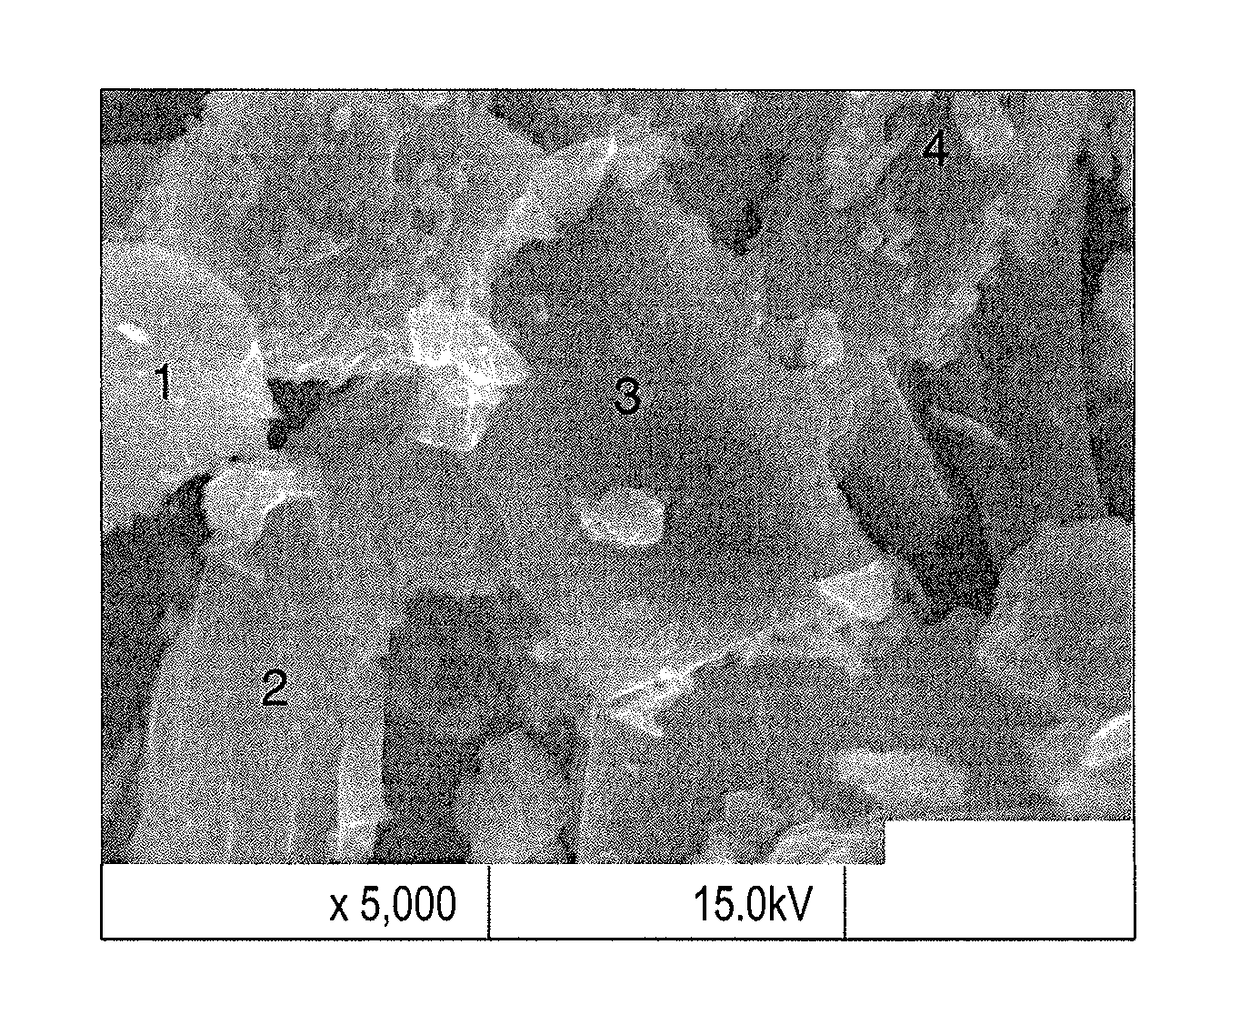 Nitrogen and phosphorus co-doped crystalline carbon materials